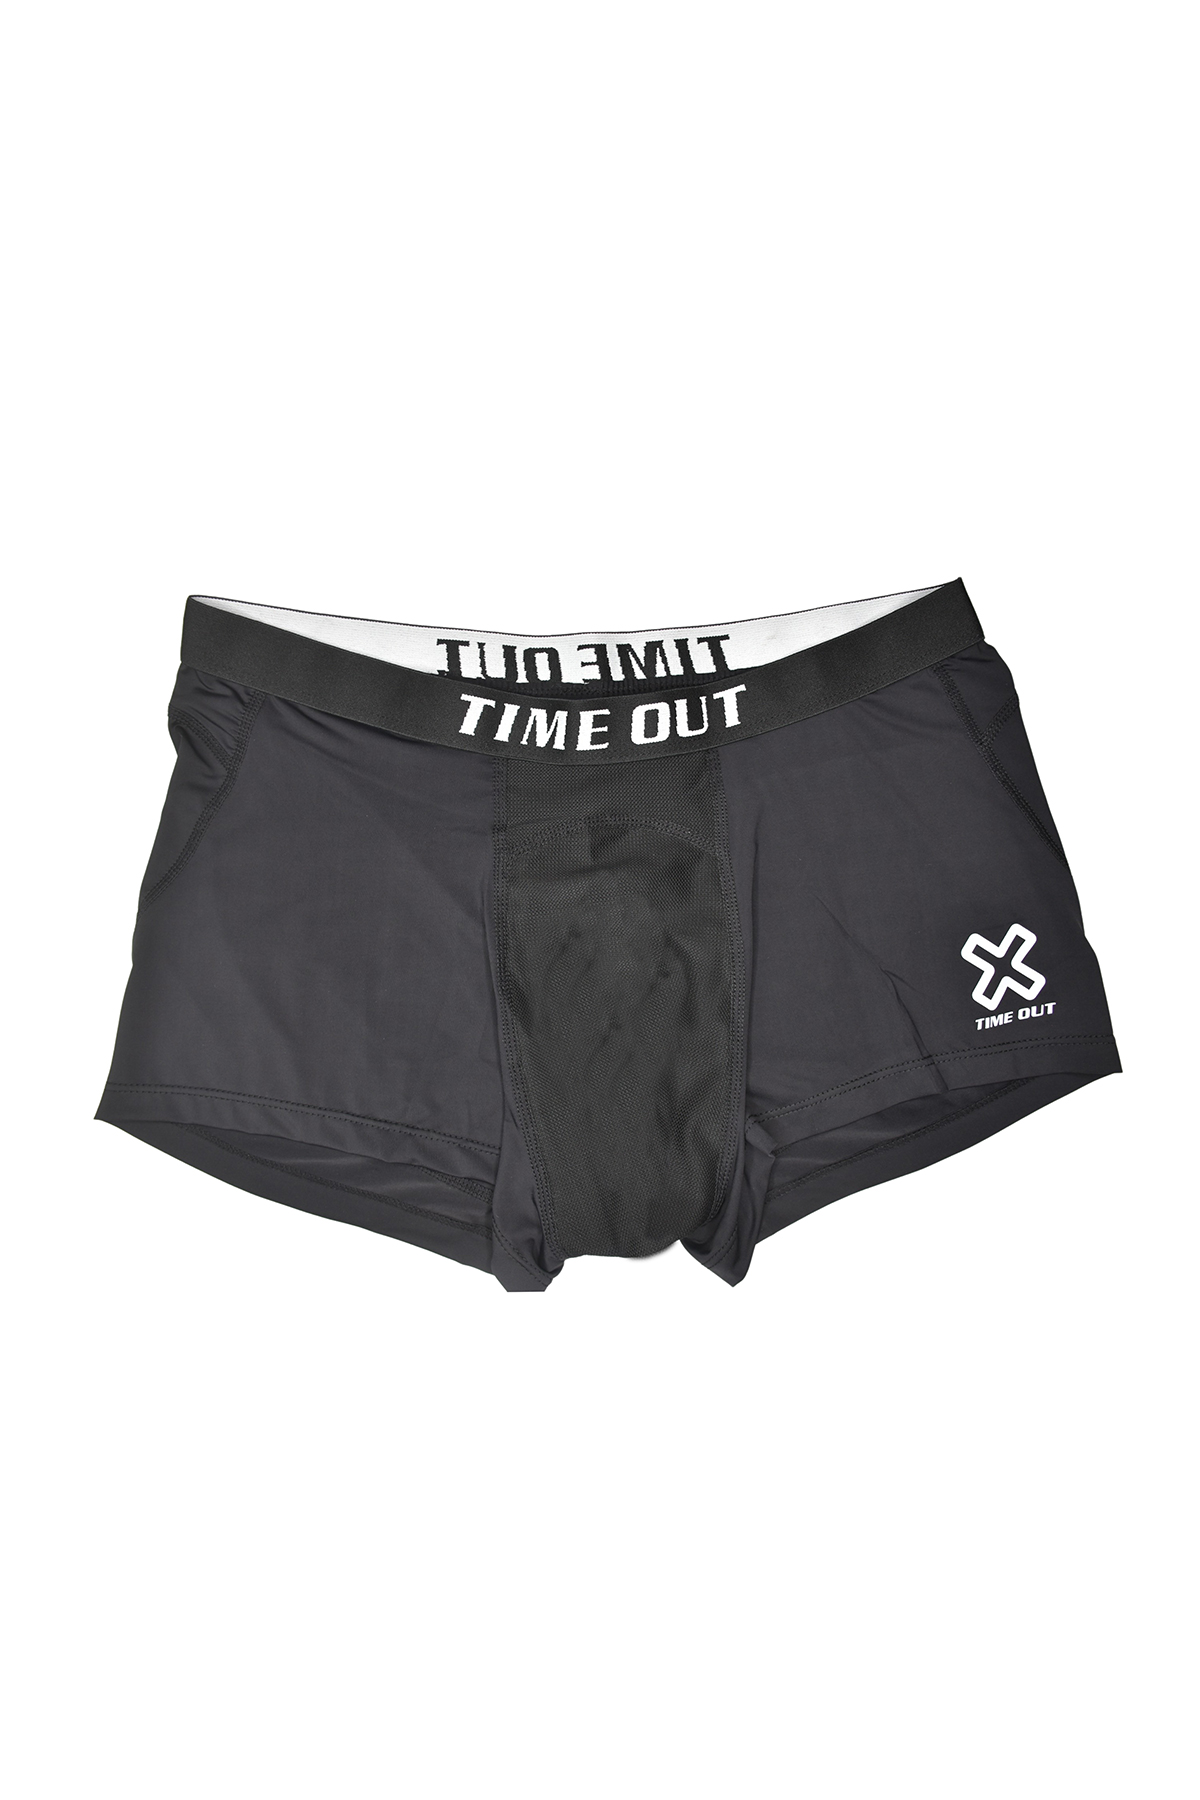 Time-Out-X-Men’s-Activewear-Boxers—Black—Front